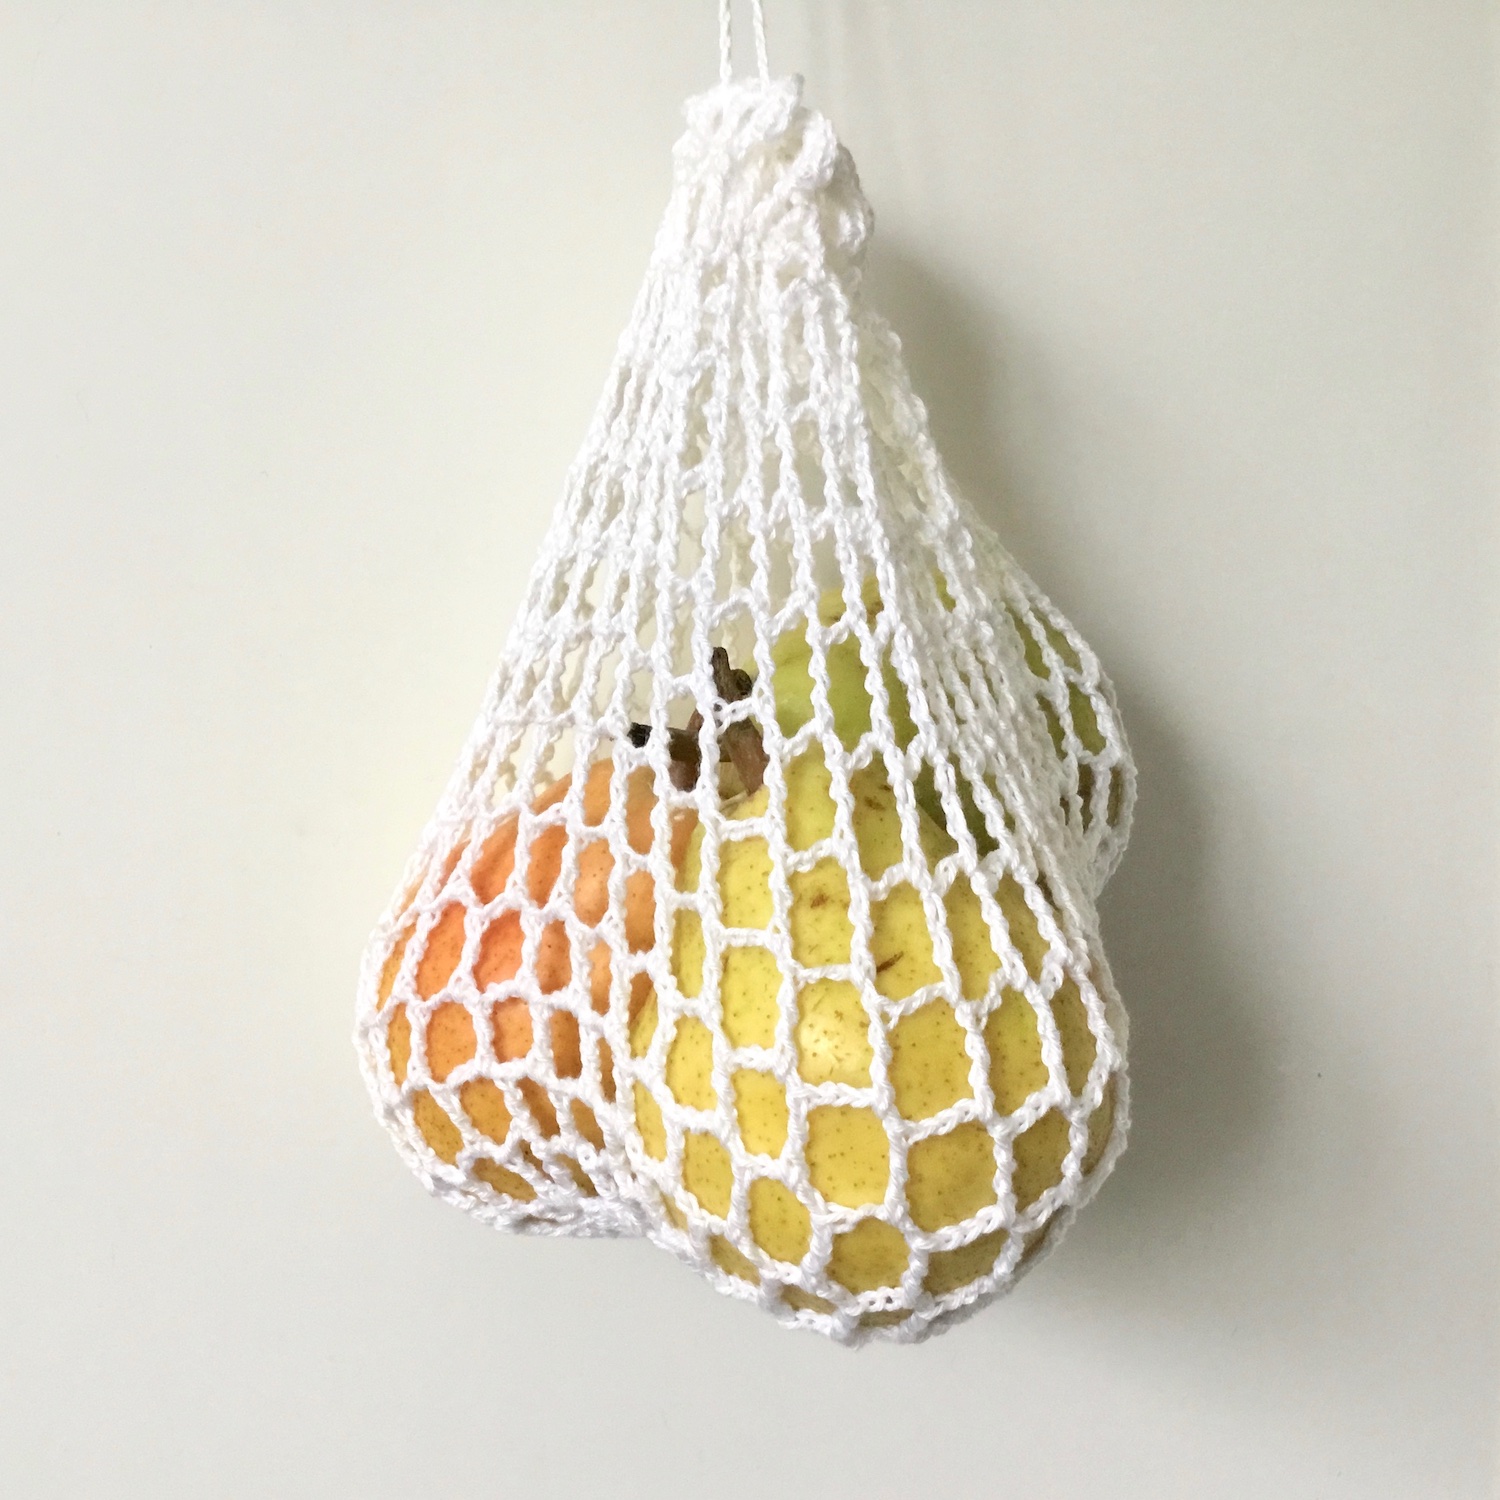 Crochet pattern for a reusable produce bag